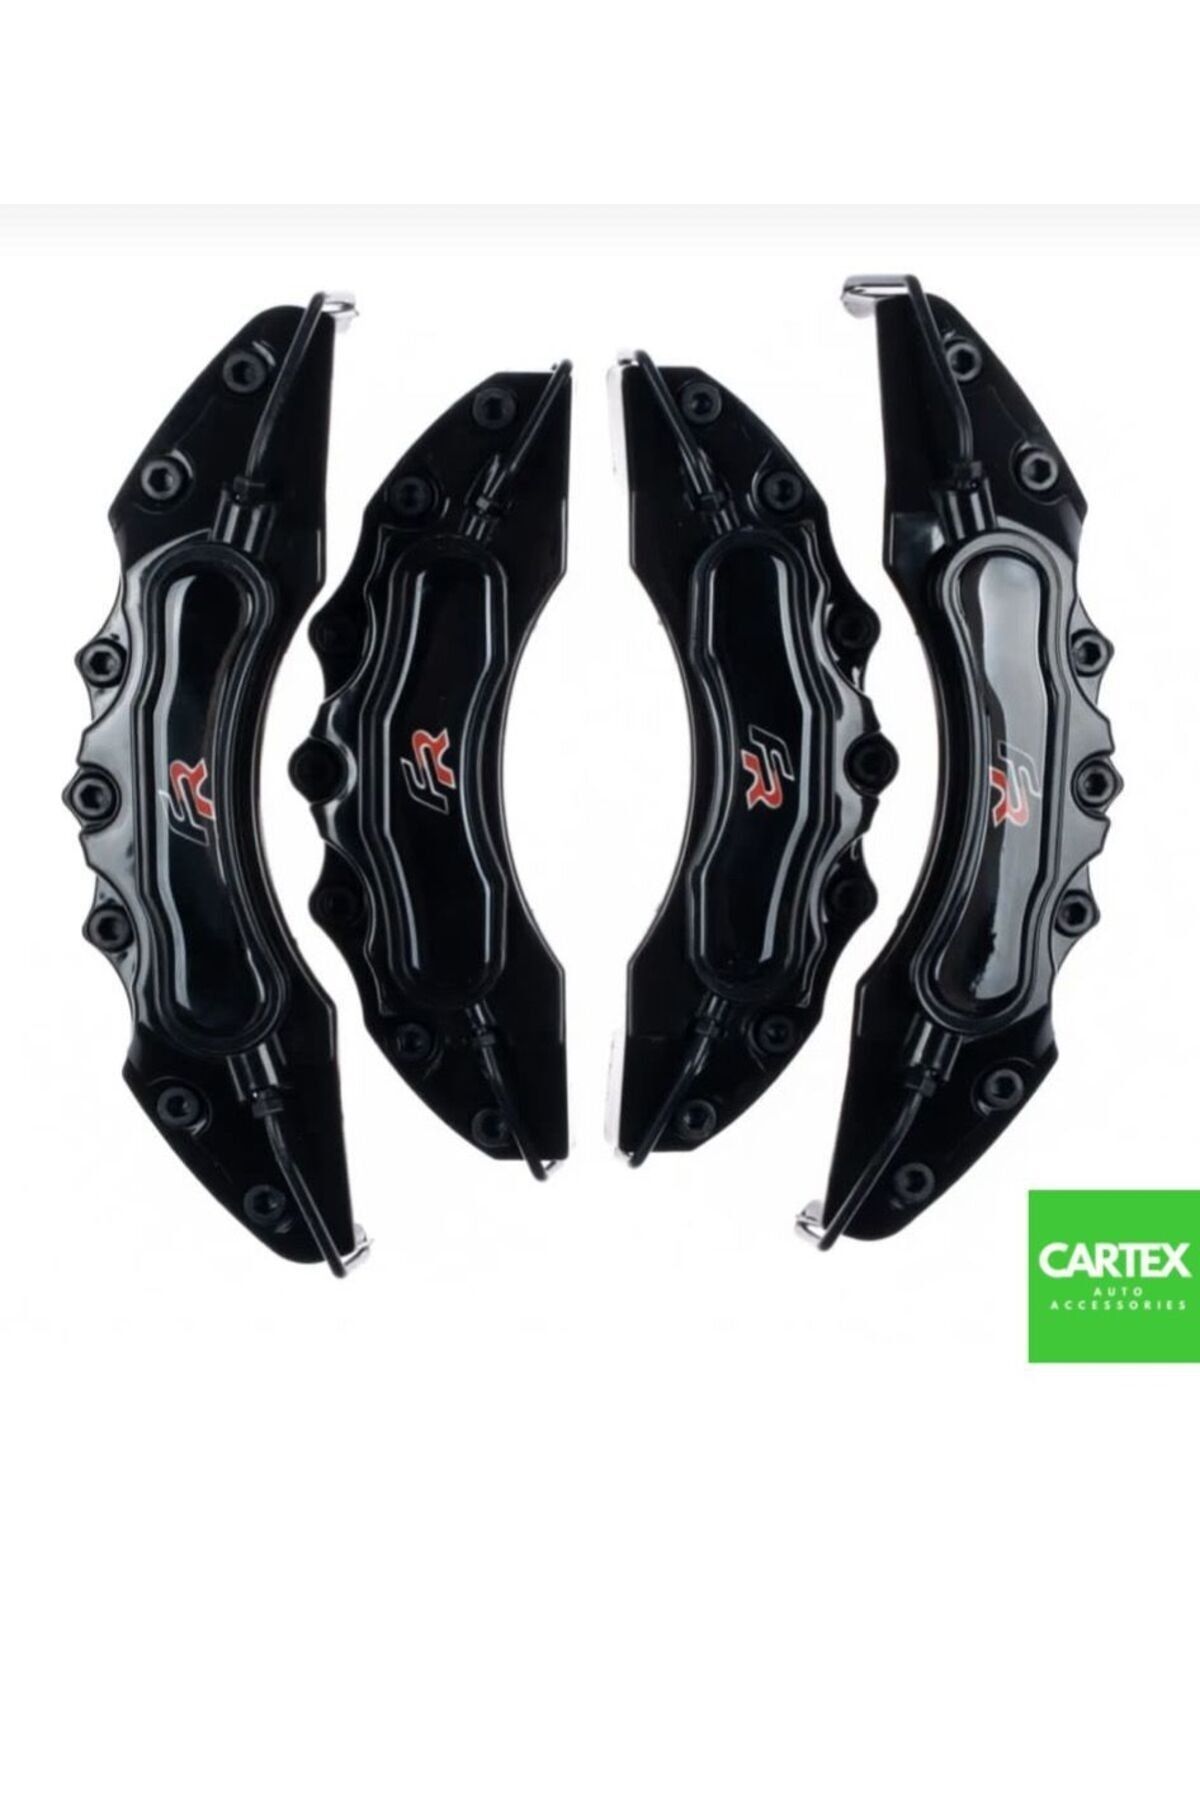 Cartex SEAT FR Logolu  uyumlu Siyah Kaliper Kapağı 4 Parça